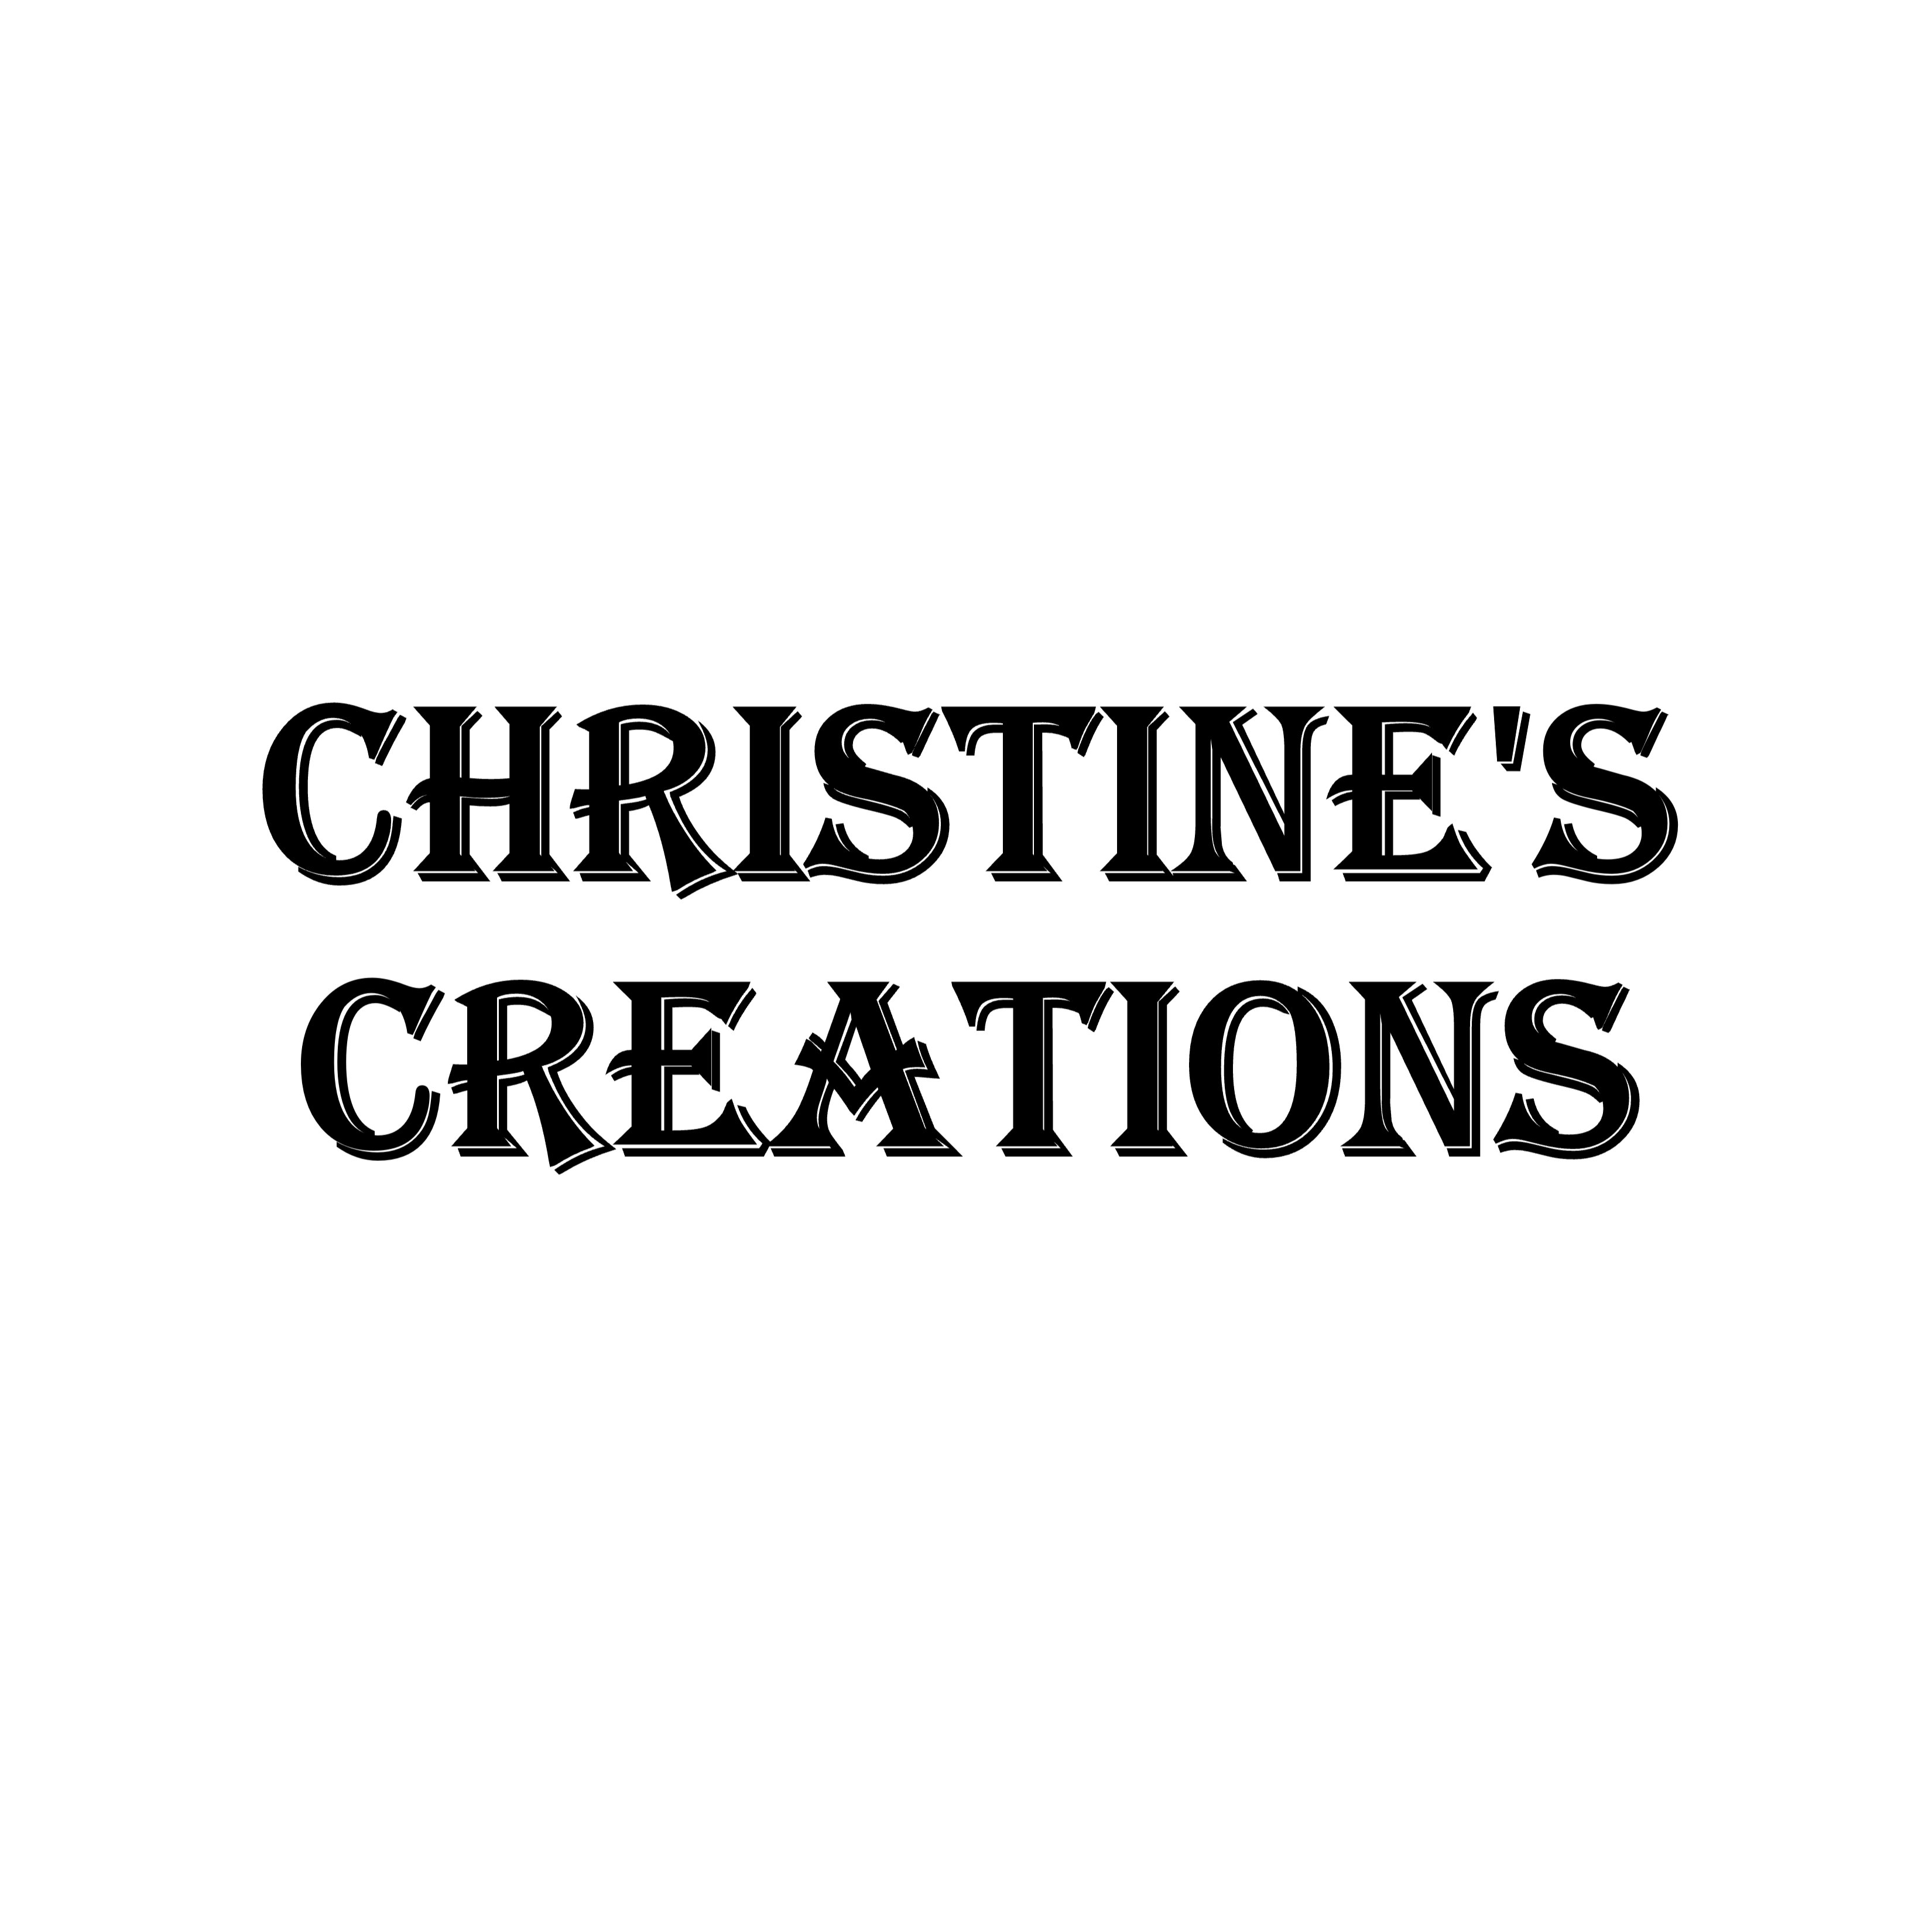 Christine's Creations